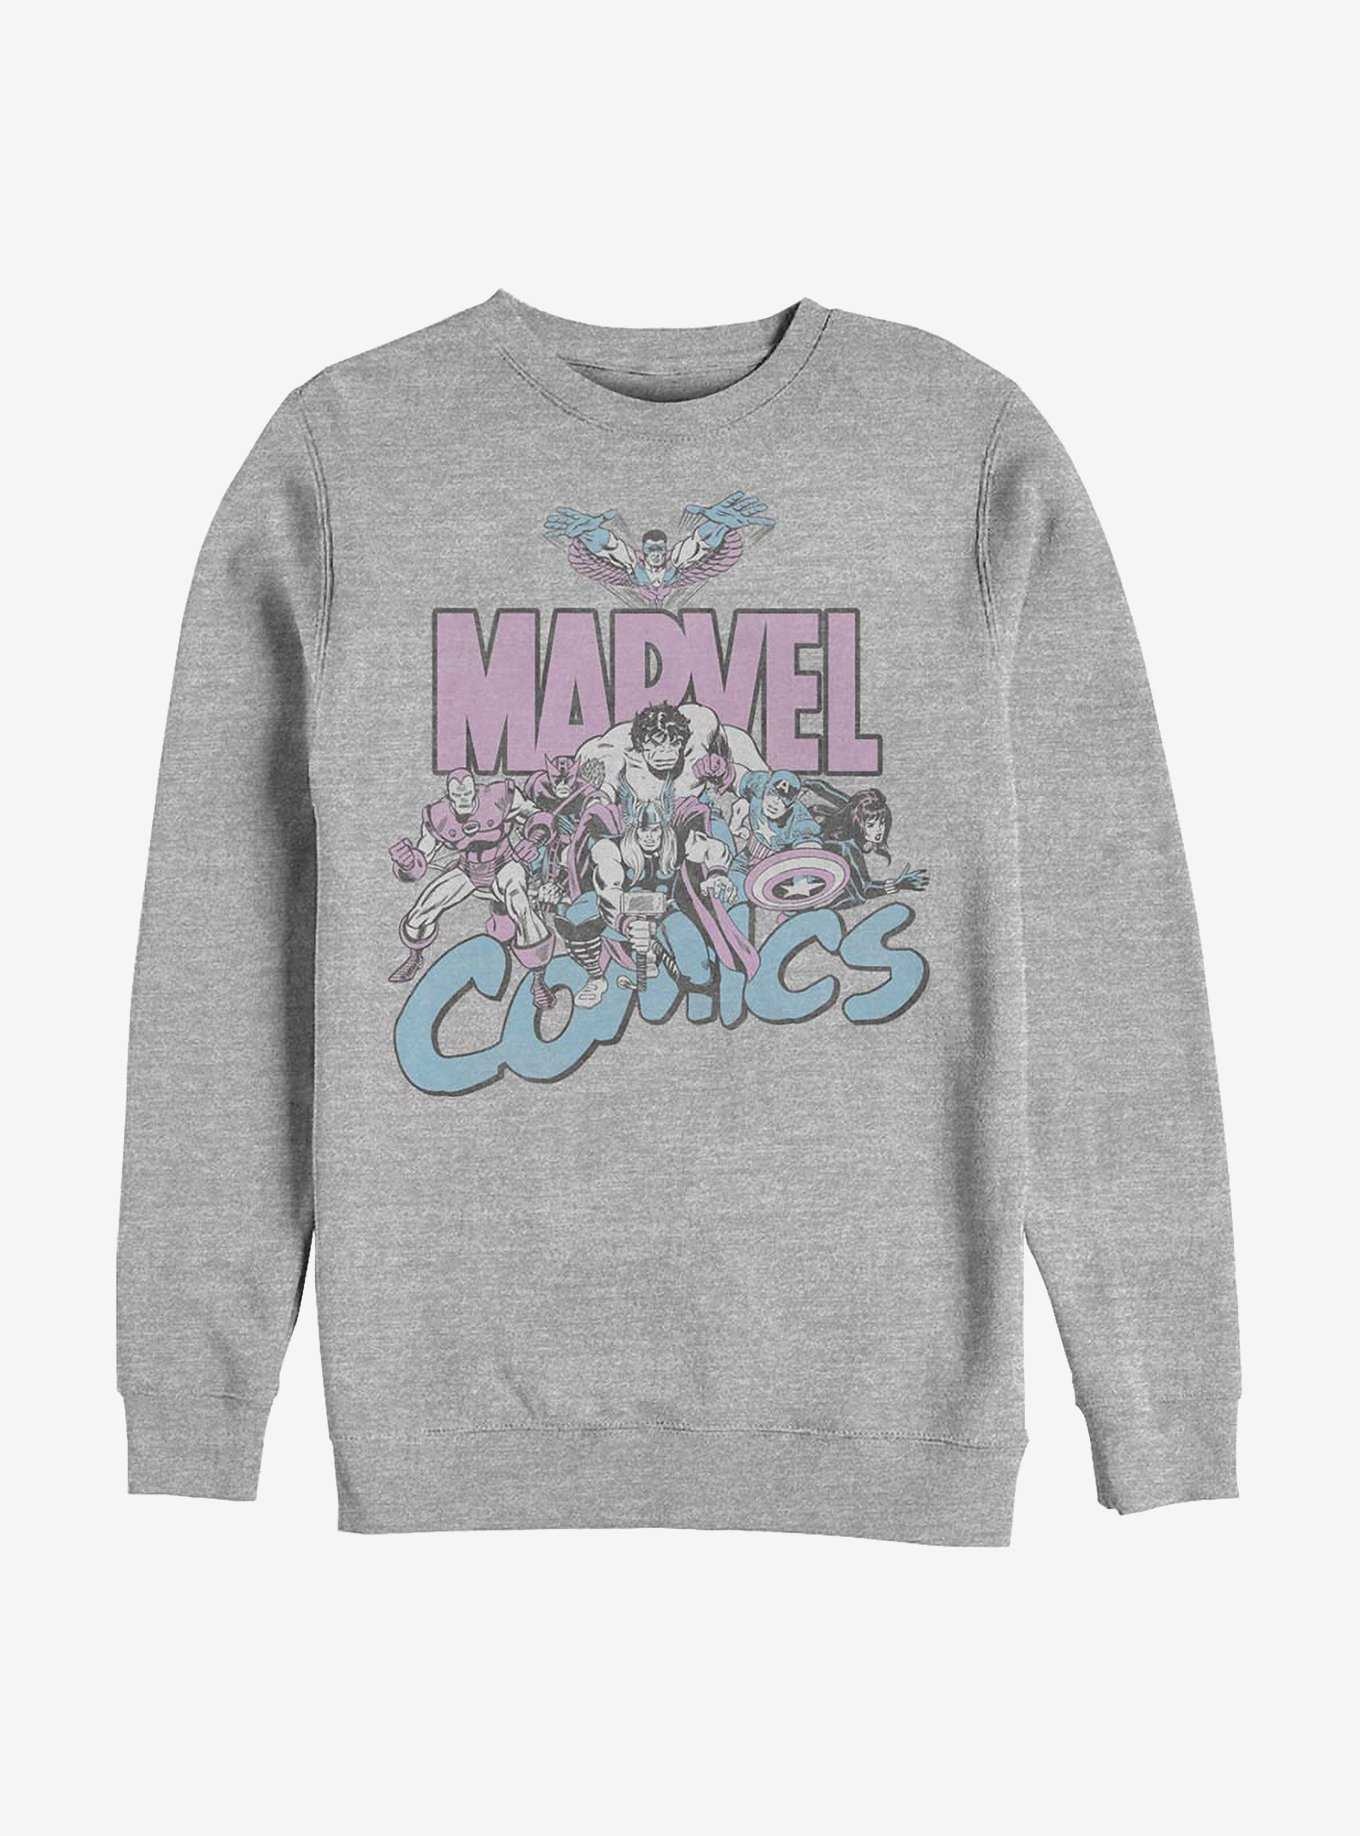 Marvel Avengers Pastel Group Crew Sweatshirt, , hi-res